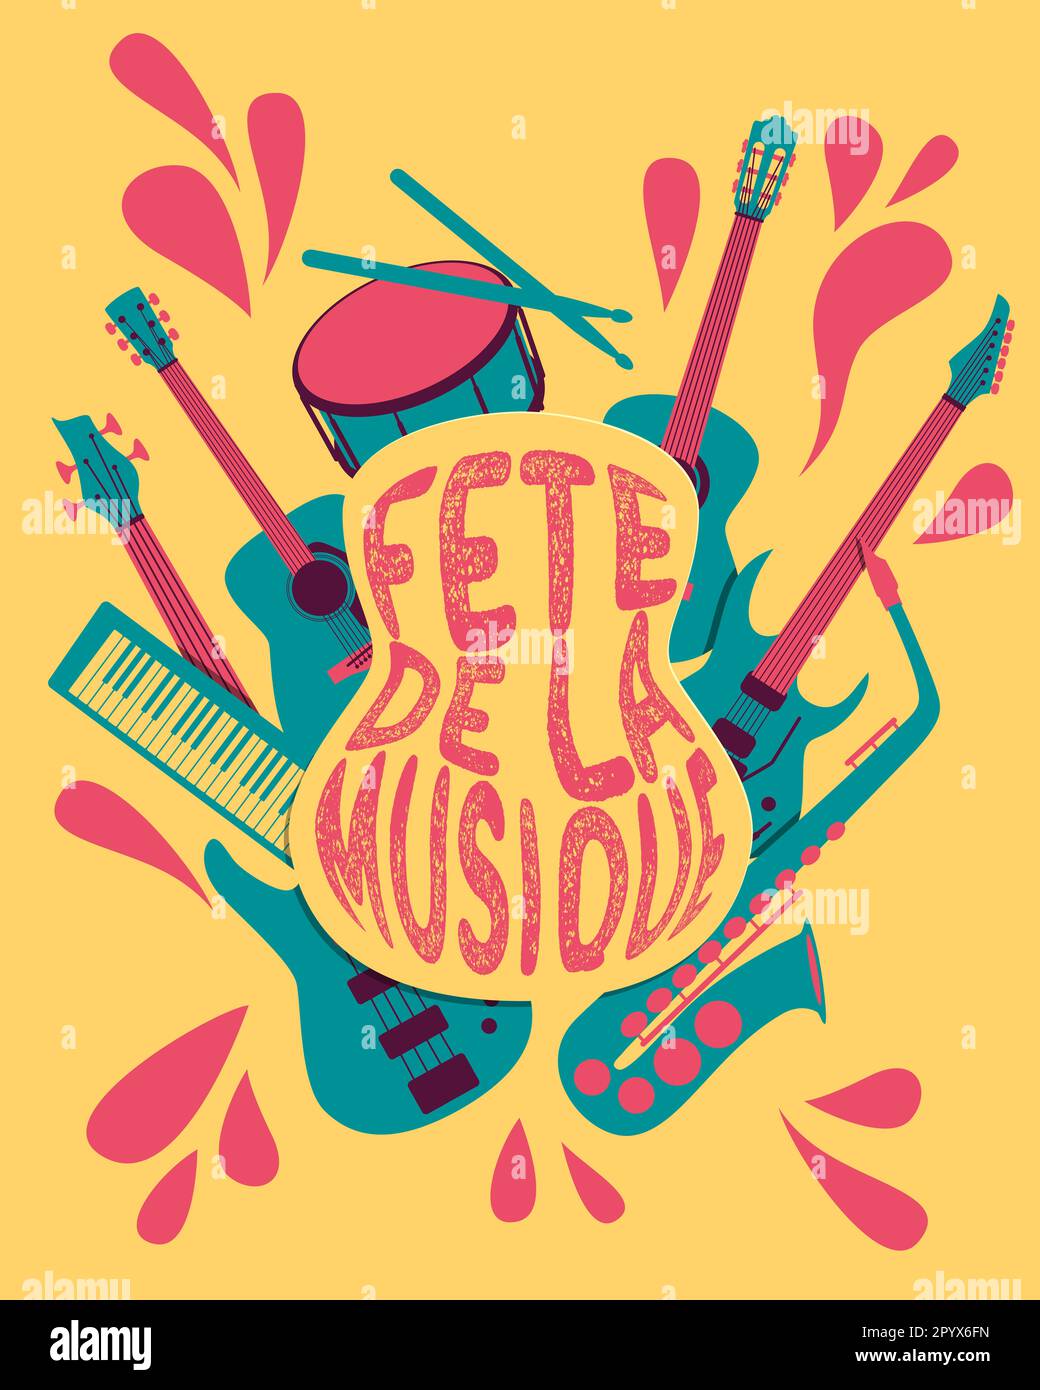 France World Music Day design - guitares et instruments thème d'illustration Banque D'Images